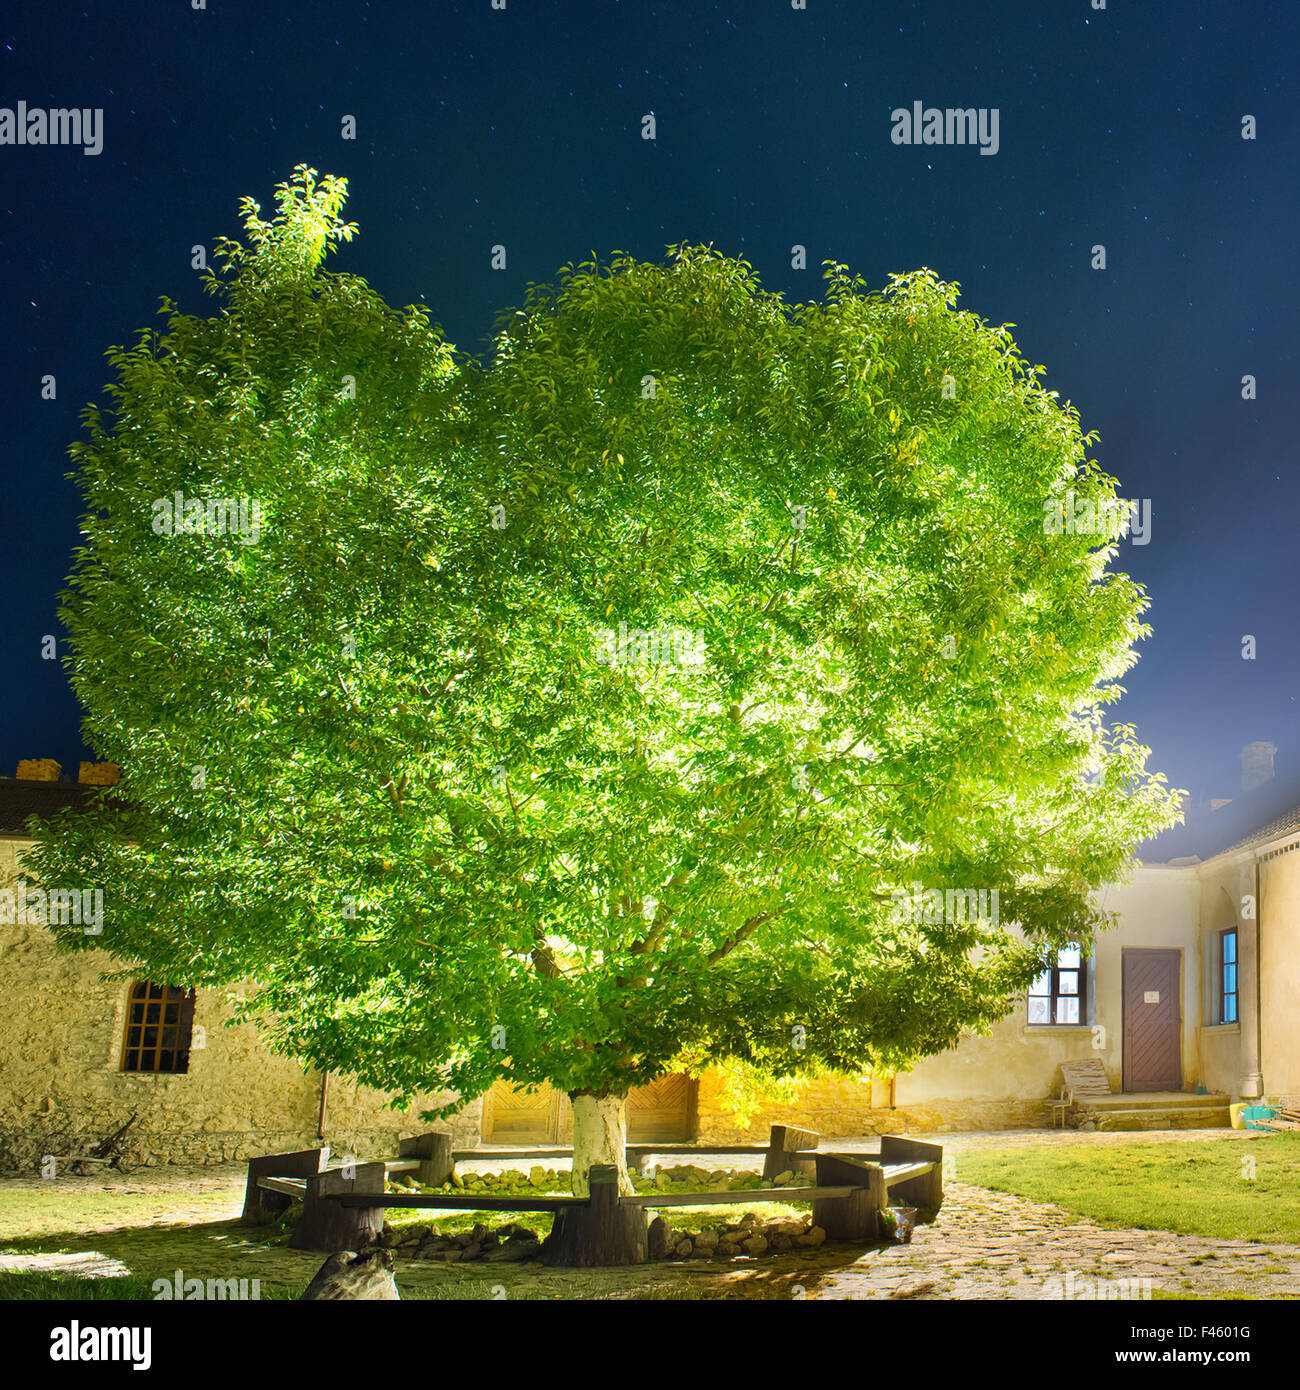 https://c8.alamy.com/comp/F4601G/green-glowing-tree-in-the-night-park-F4601G.jpg